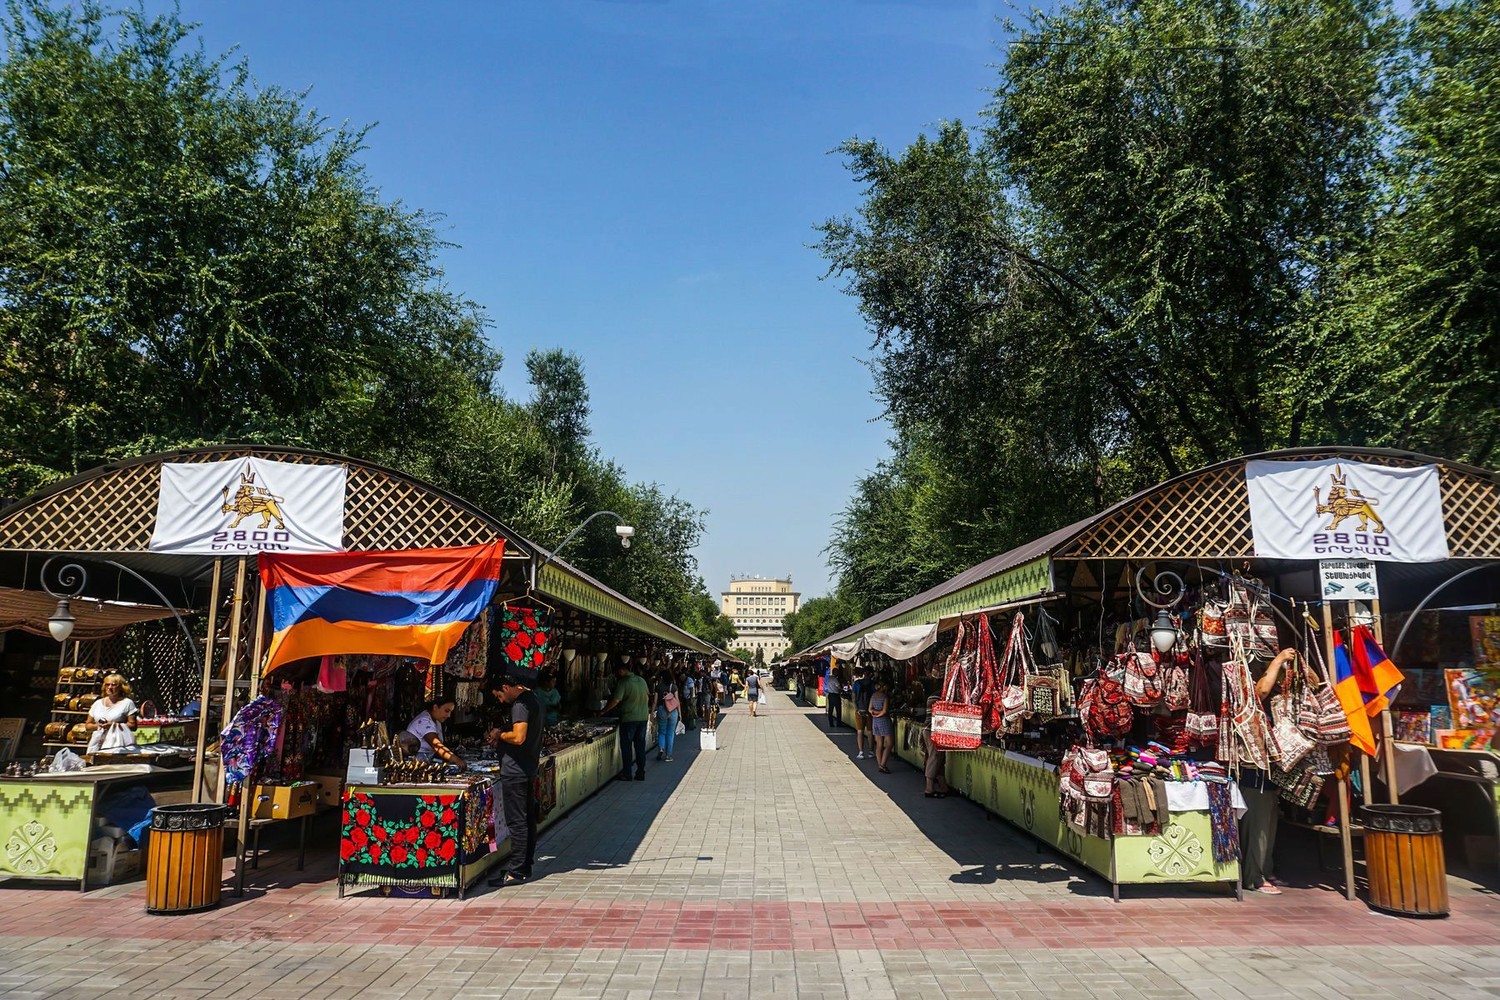 Yerevan flea market "Vernissage"